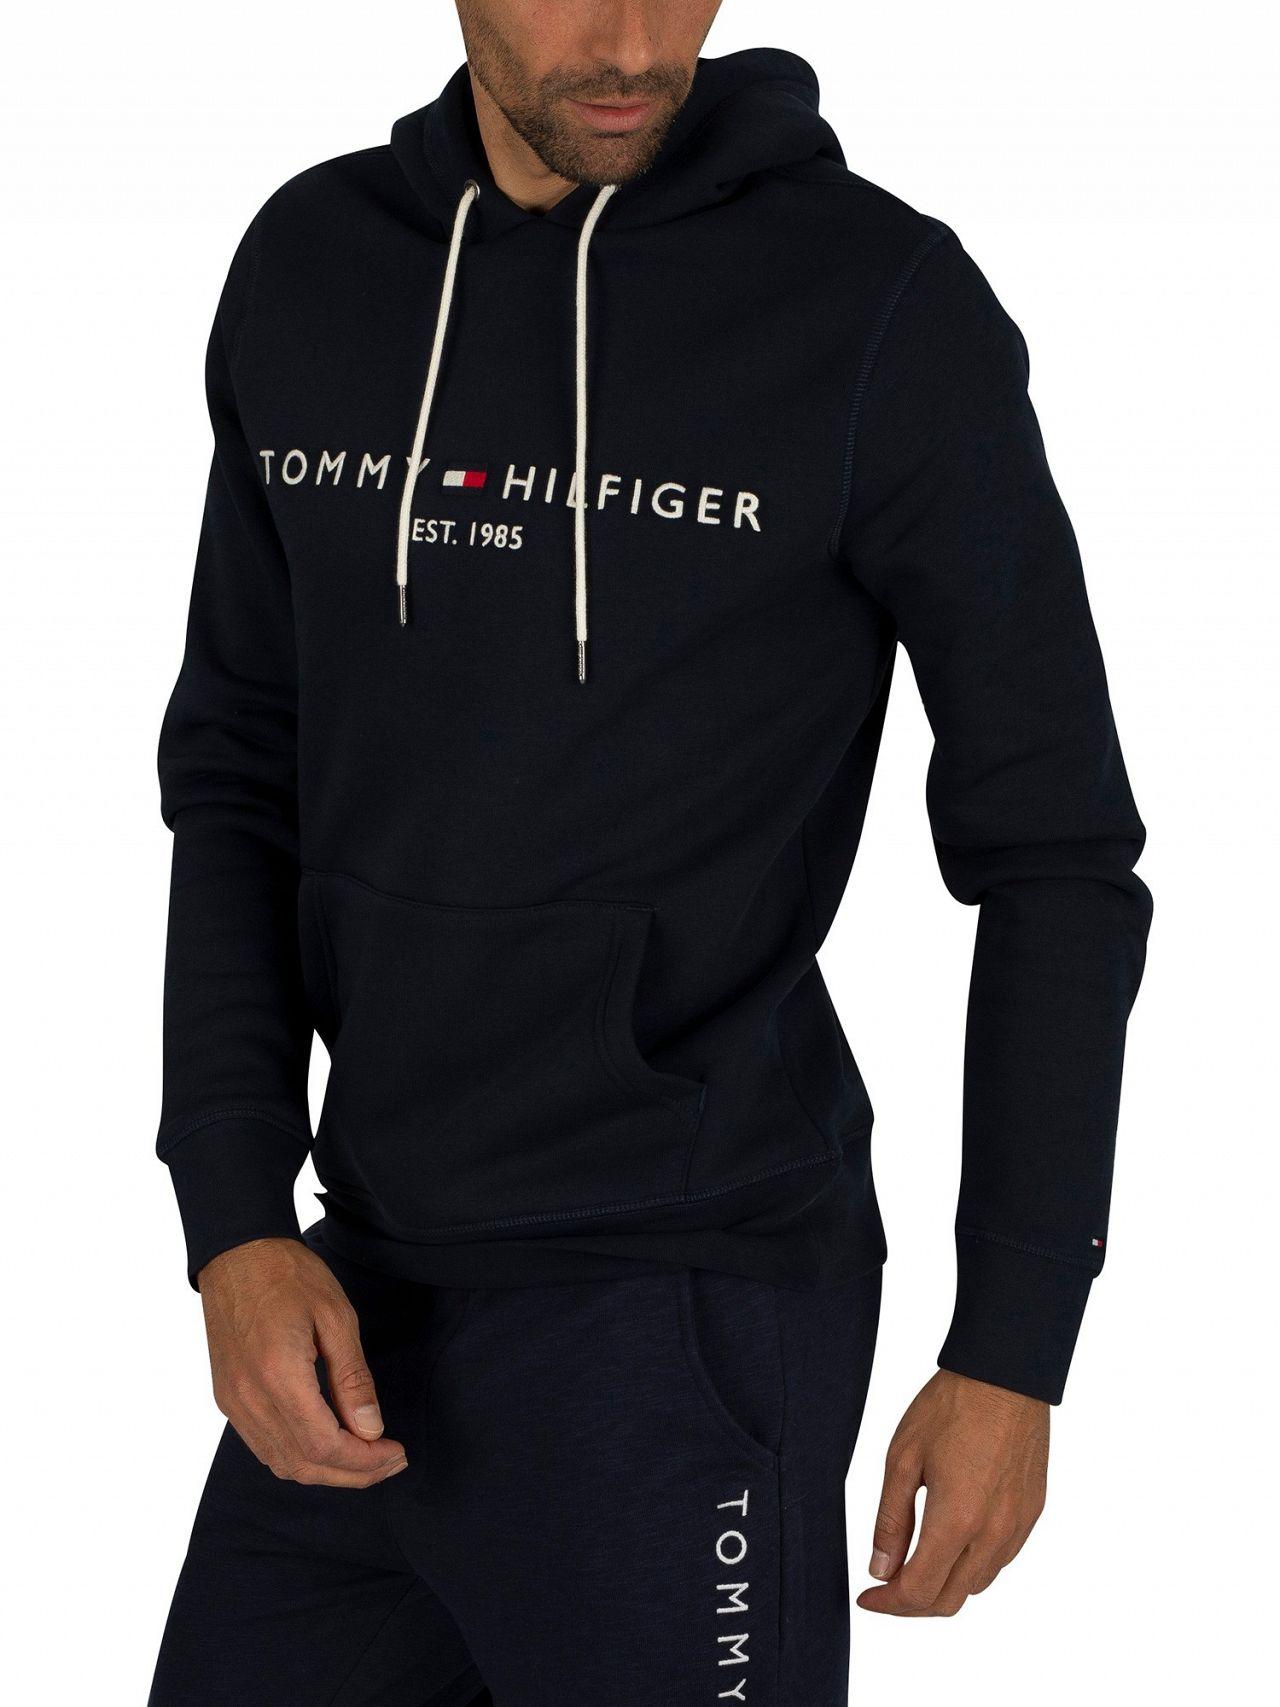 Tommy Hilfiger Sky Captain Sweatshirt Shop, 57% OFF |  www.markiesminigolf.com